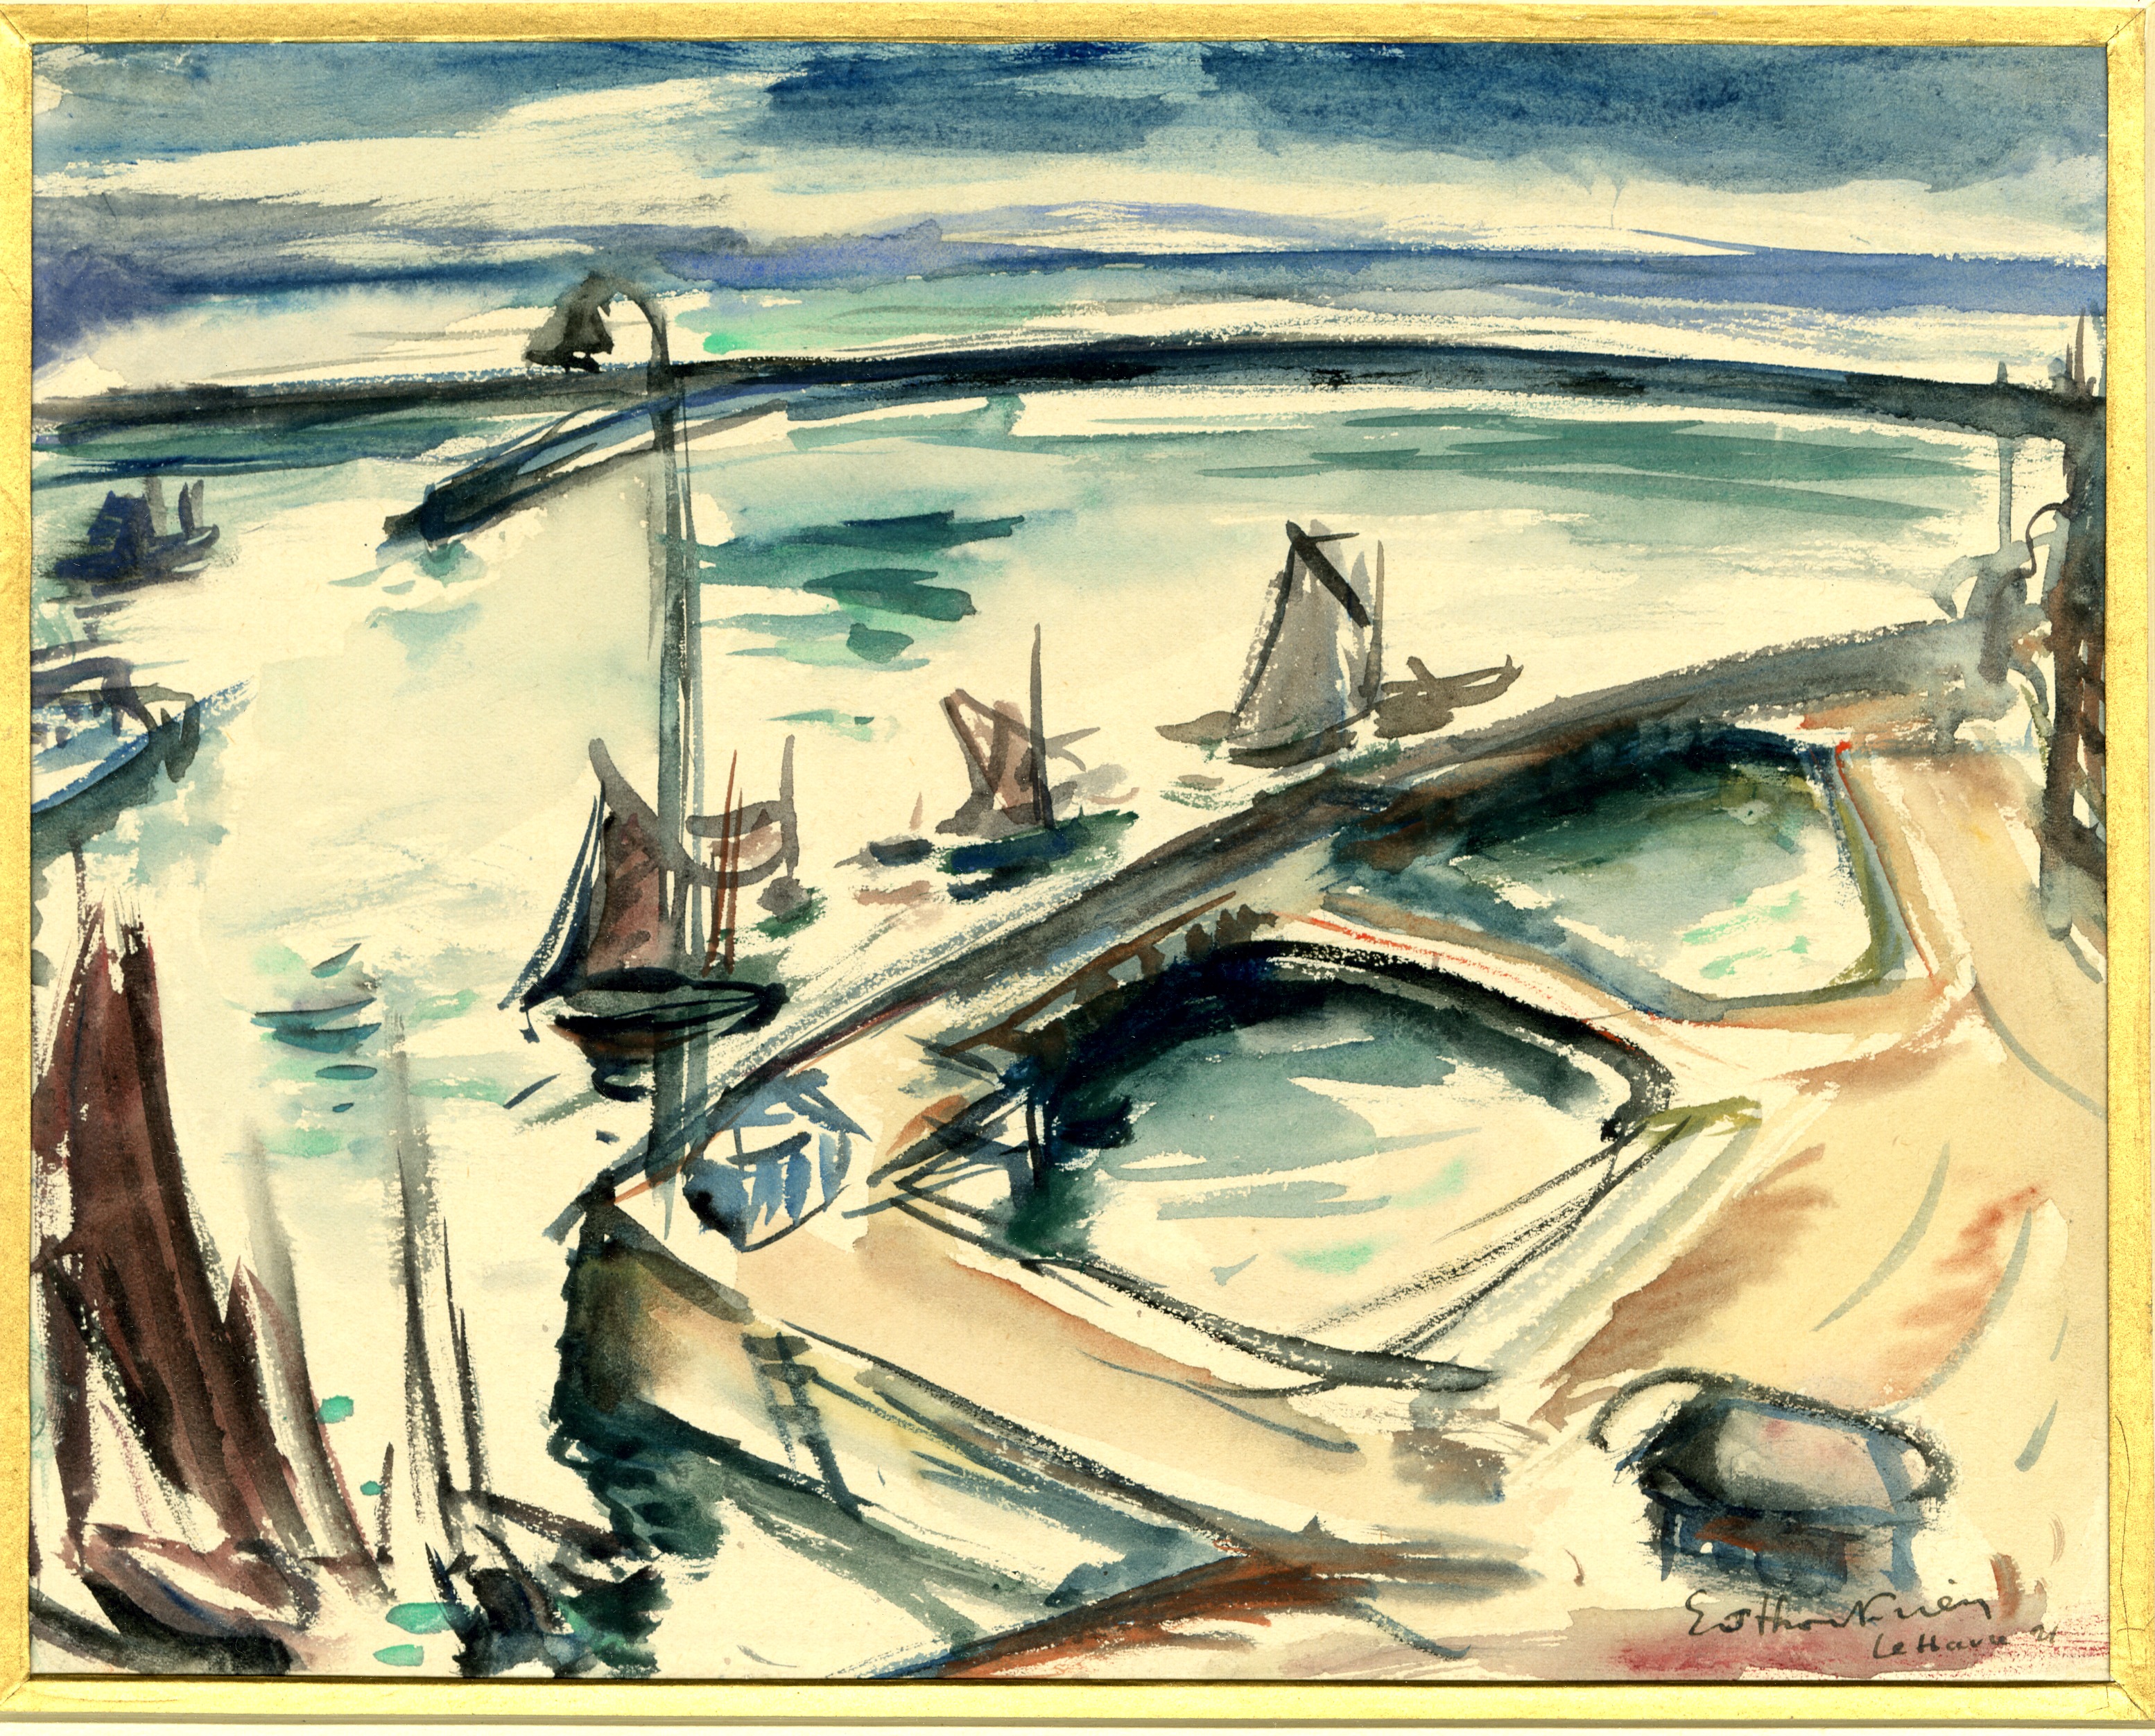 Le Havre (1921)